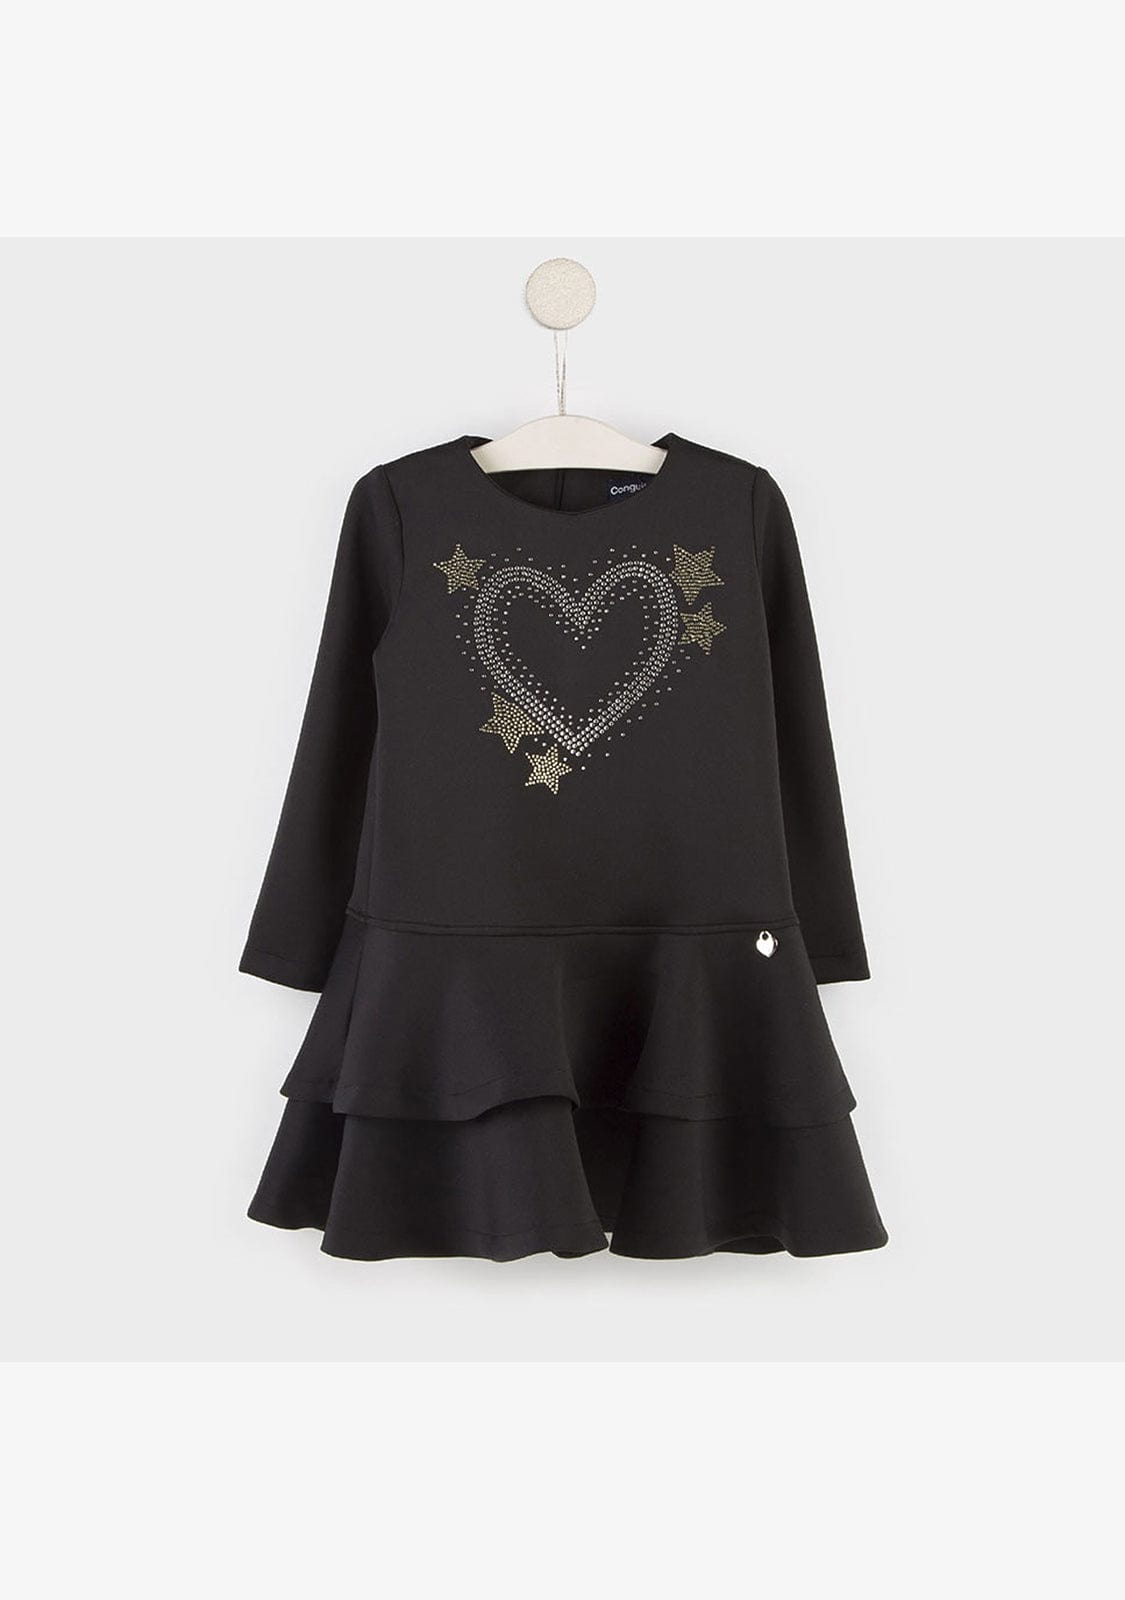 CONGUITOS TEXTIL Clothing Girl's Black "Heart" Ruffled Dress